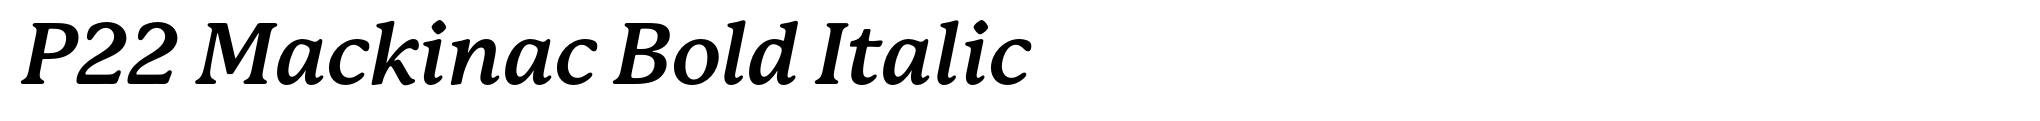 P22 Mackinac Bold Italic image